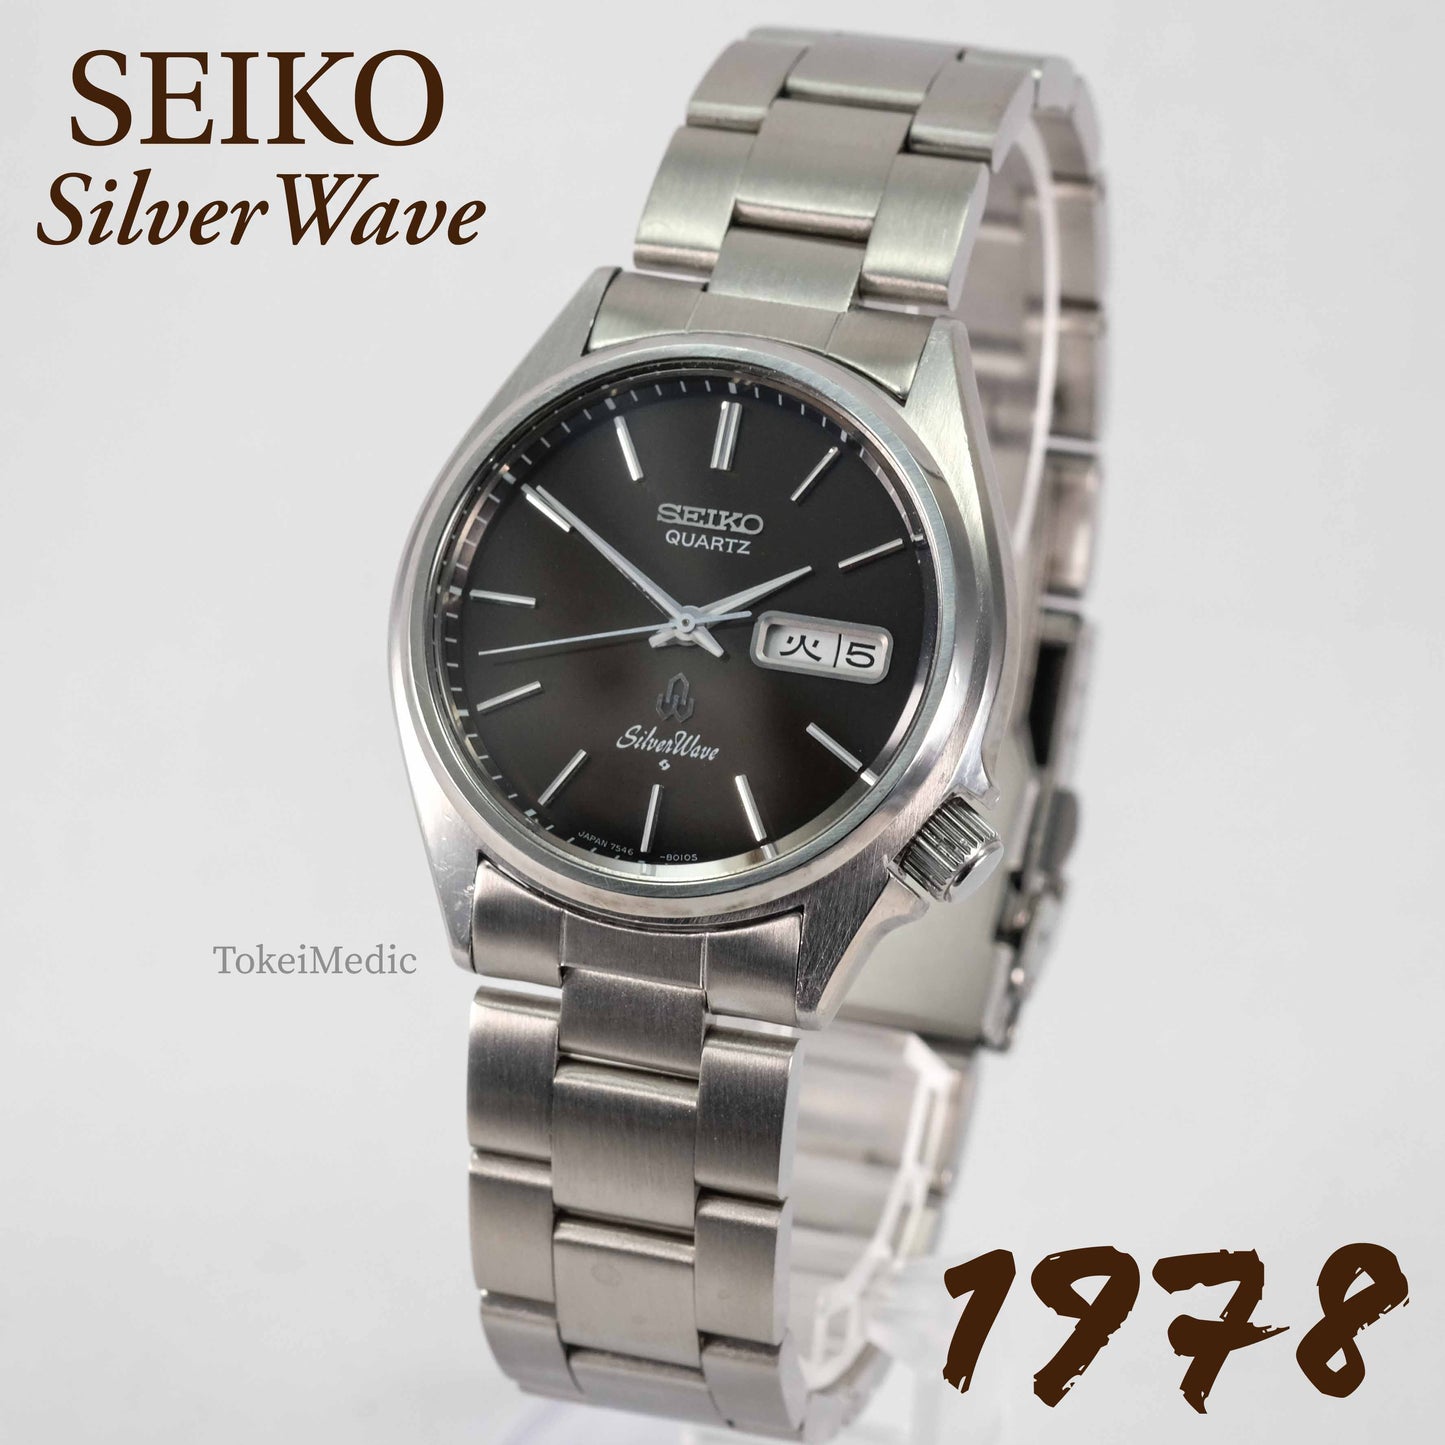 1978 Seiko SilverWave Quartz 7546-801A